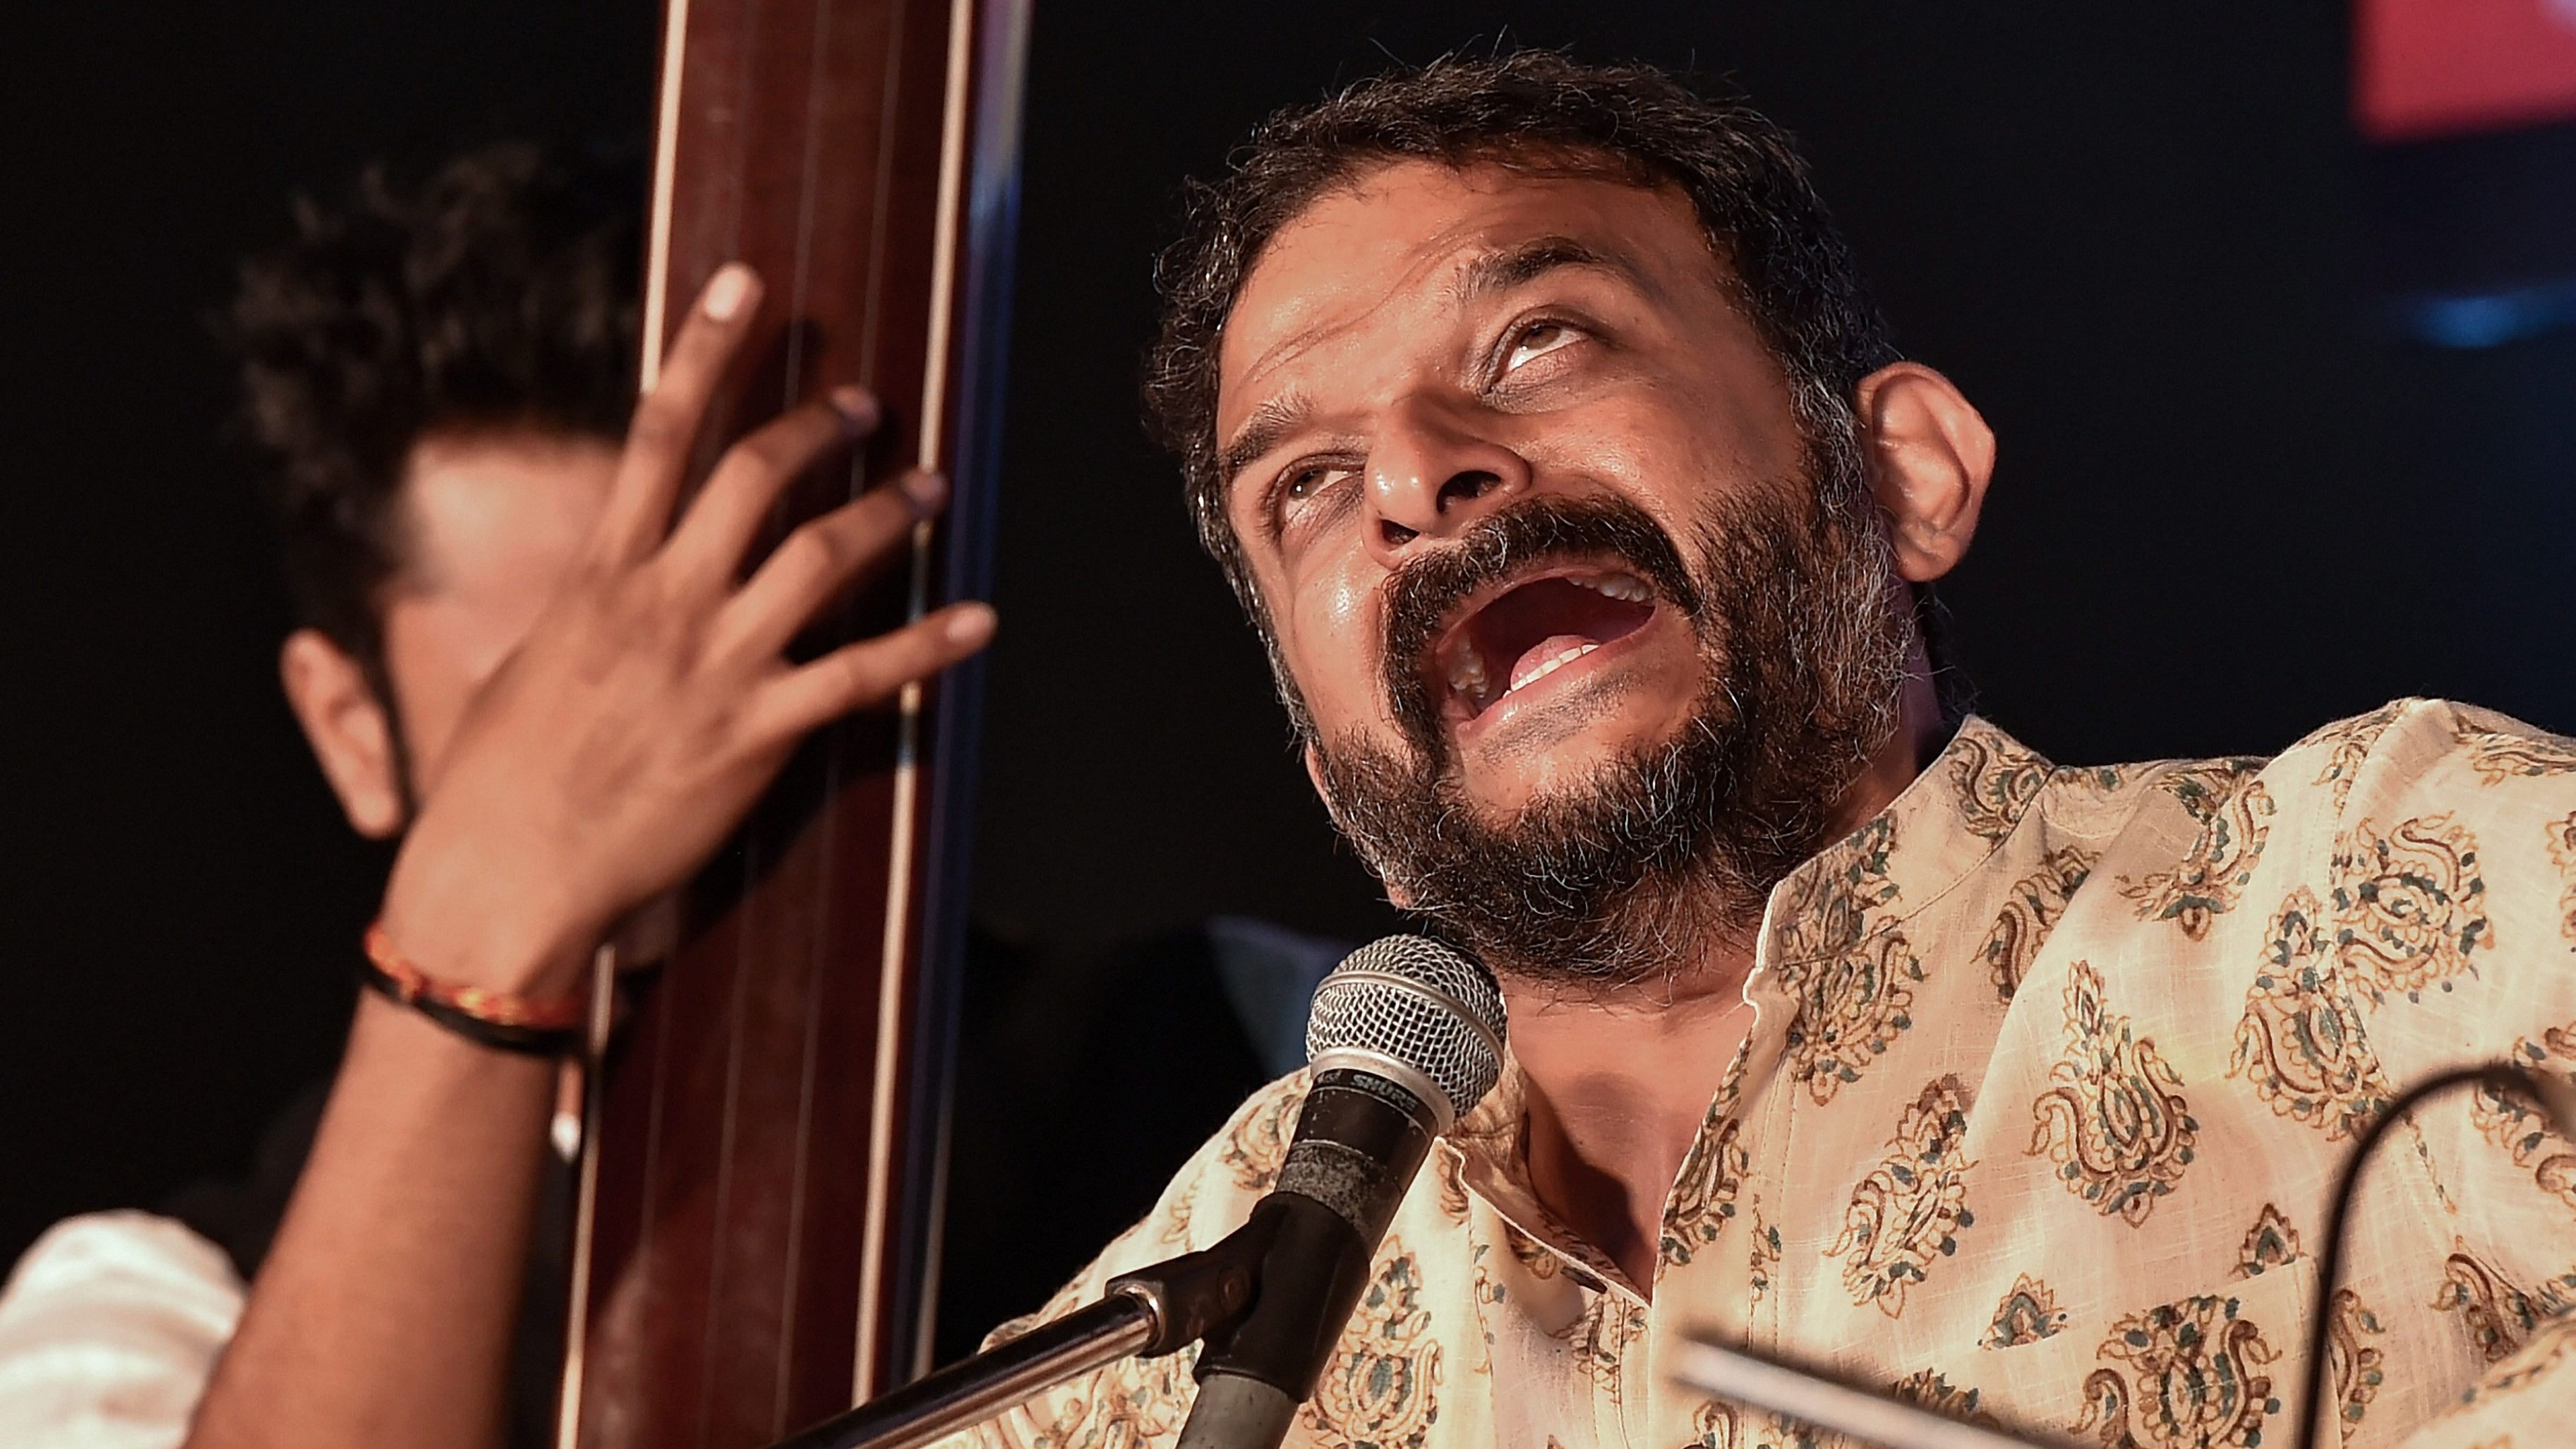 <div class="paragraphs"><p>File photo of Carnatic music vocalist TM Krishna performing&nbsp; during the concert," Awam ki Awaz" at the Garden of Five Senses in New Delhi.</p></div>